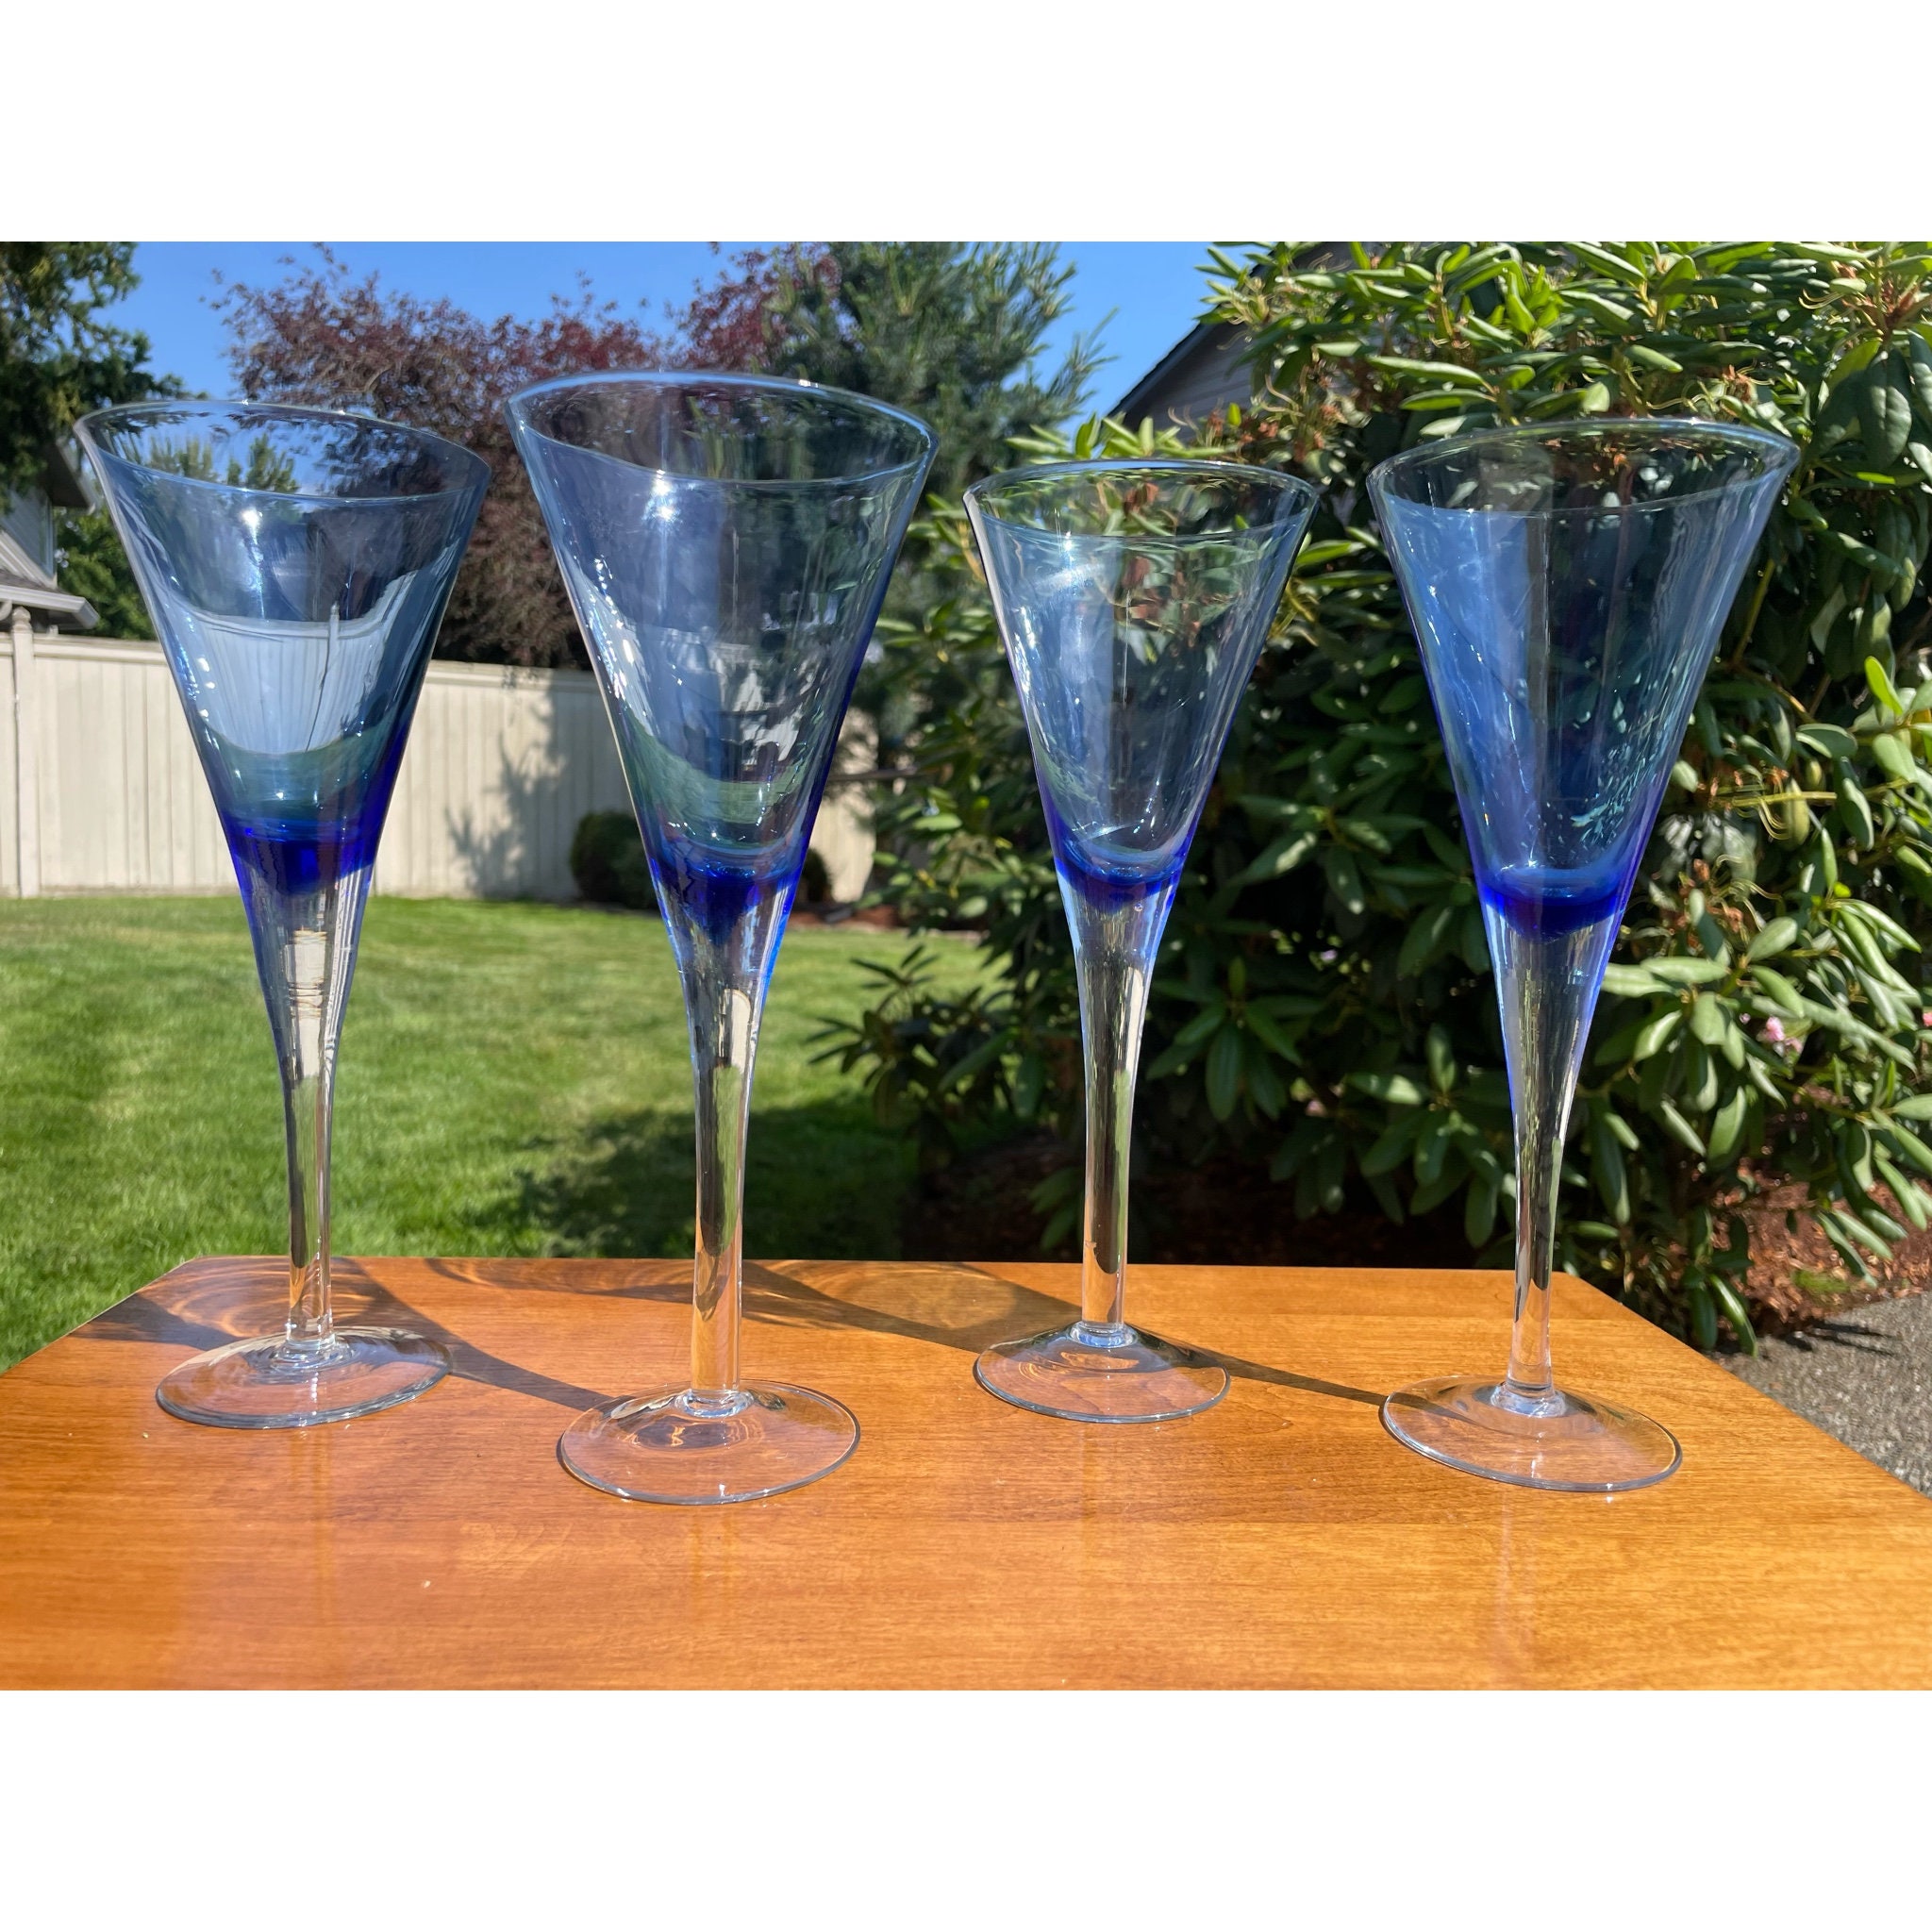 Juvale Martini Glasses - Set of 6 Clear Classic 5-Ounce Cocktail Glasses Nib